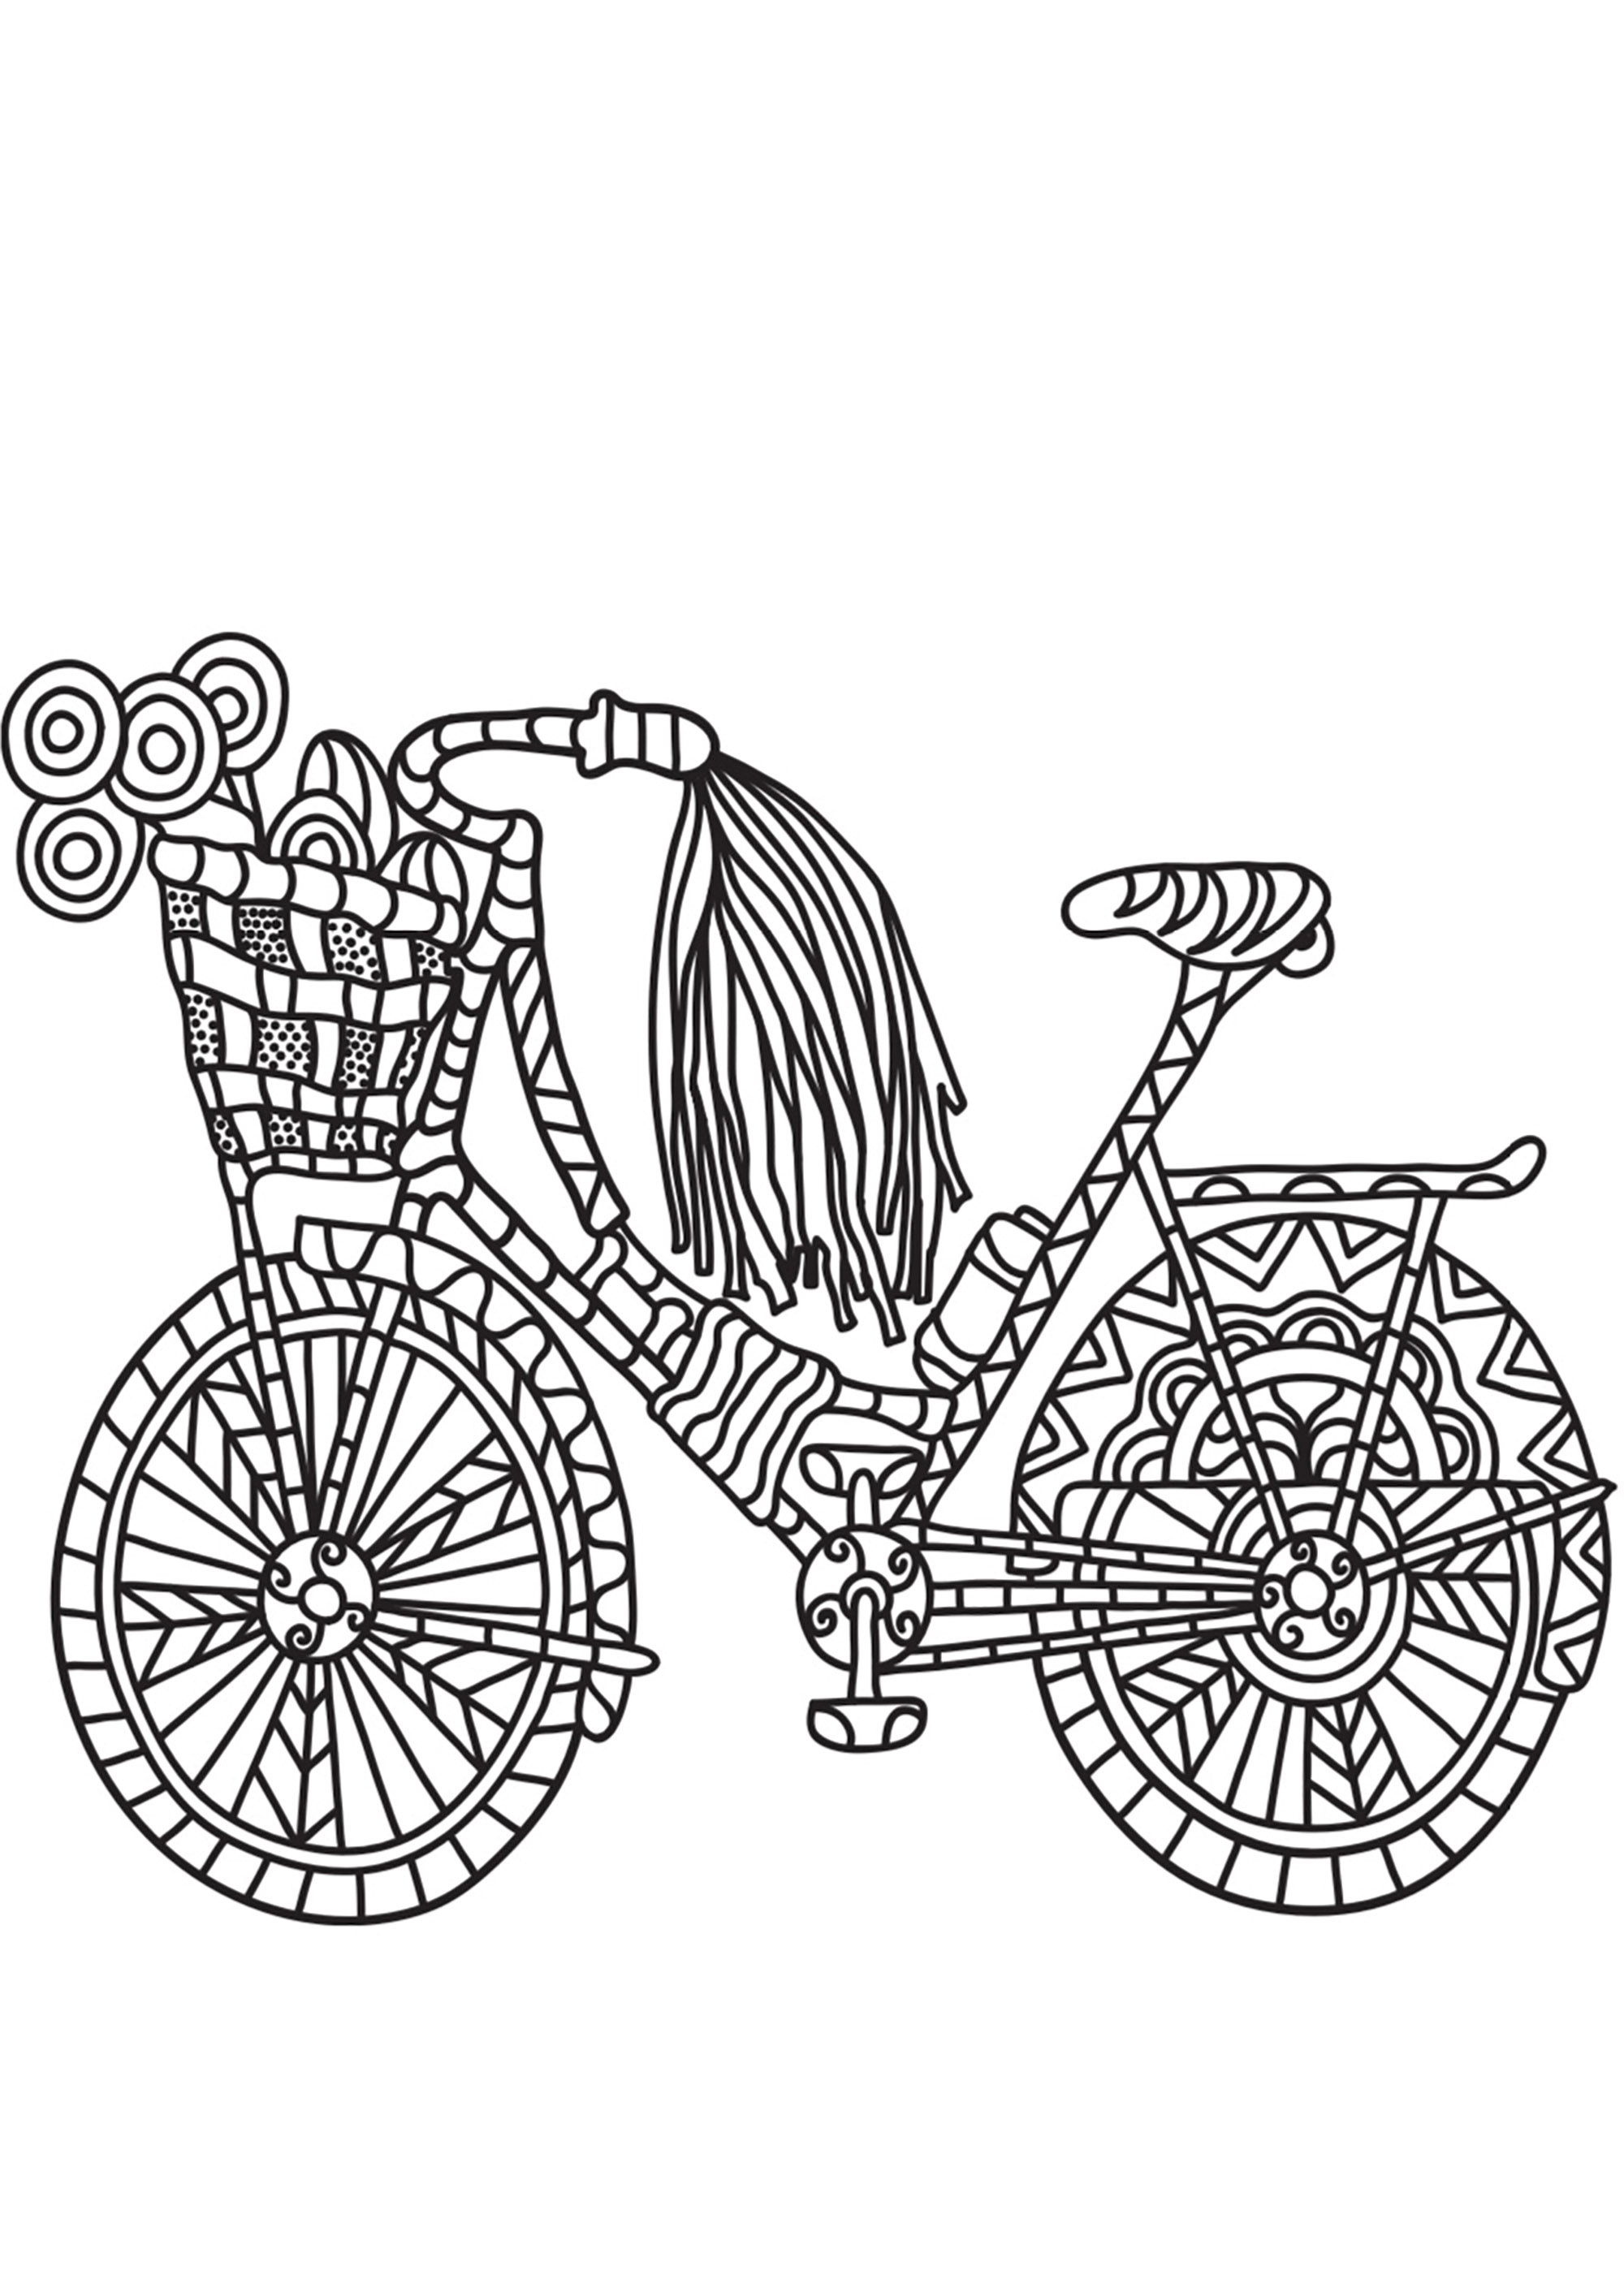 Diseño sencillo de bicicleta con motivos sencillos. Un libro para colorear que te transportará a la infancia